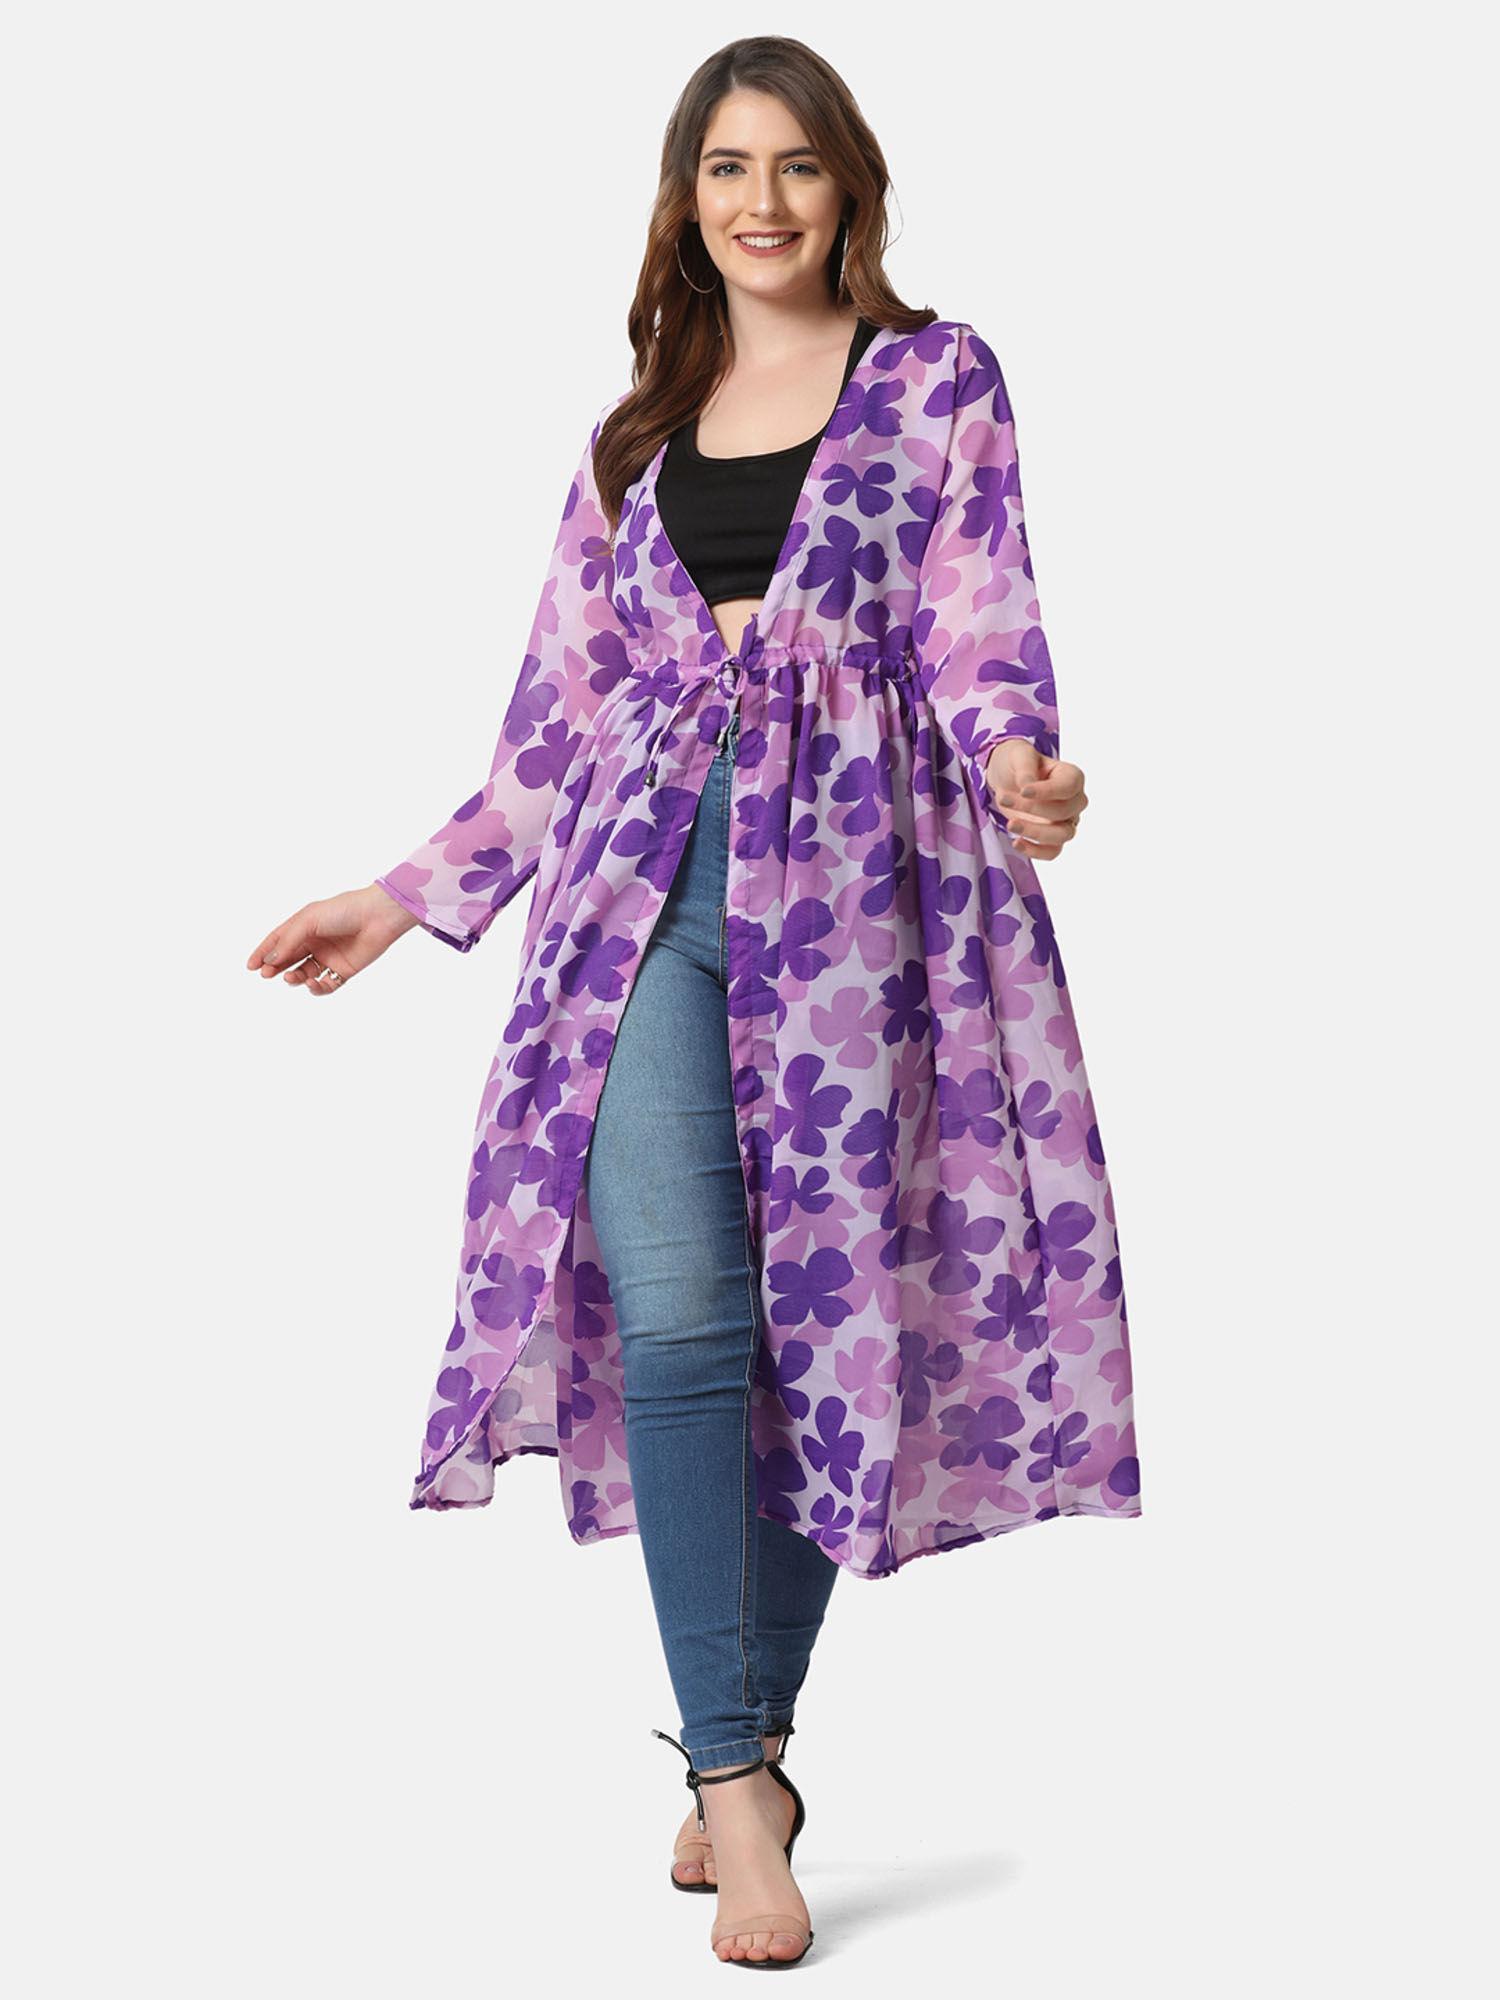 georgette purple floral print women long shrug